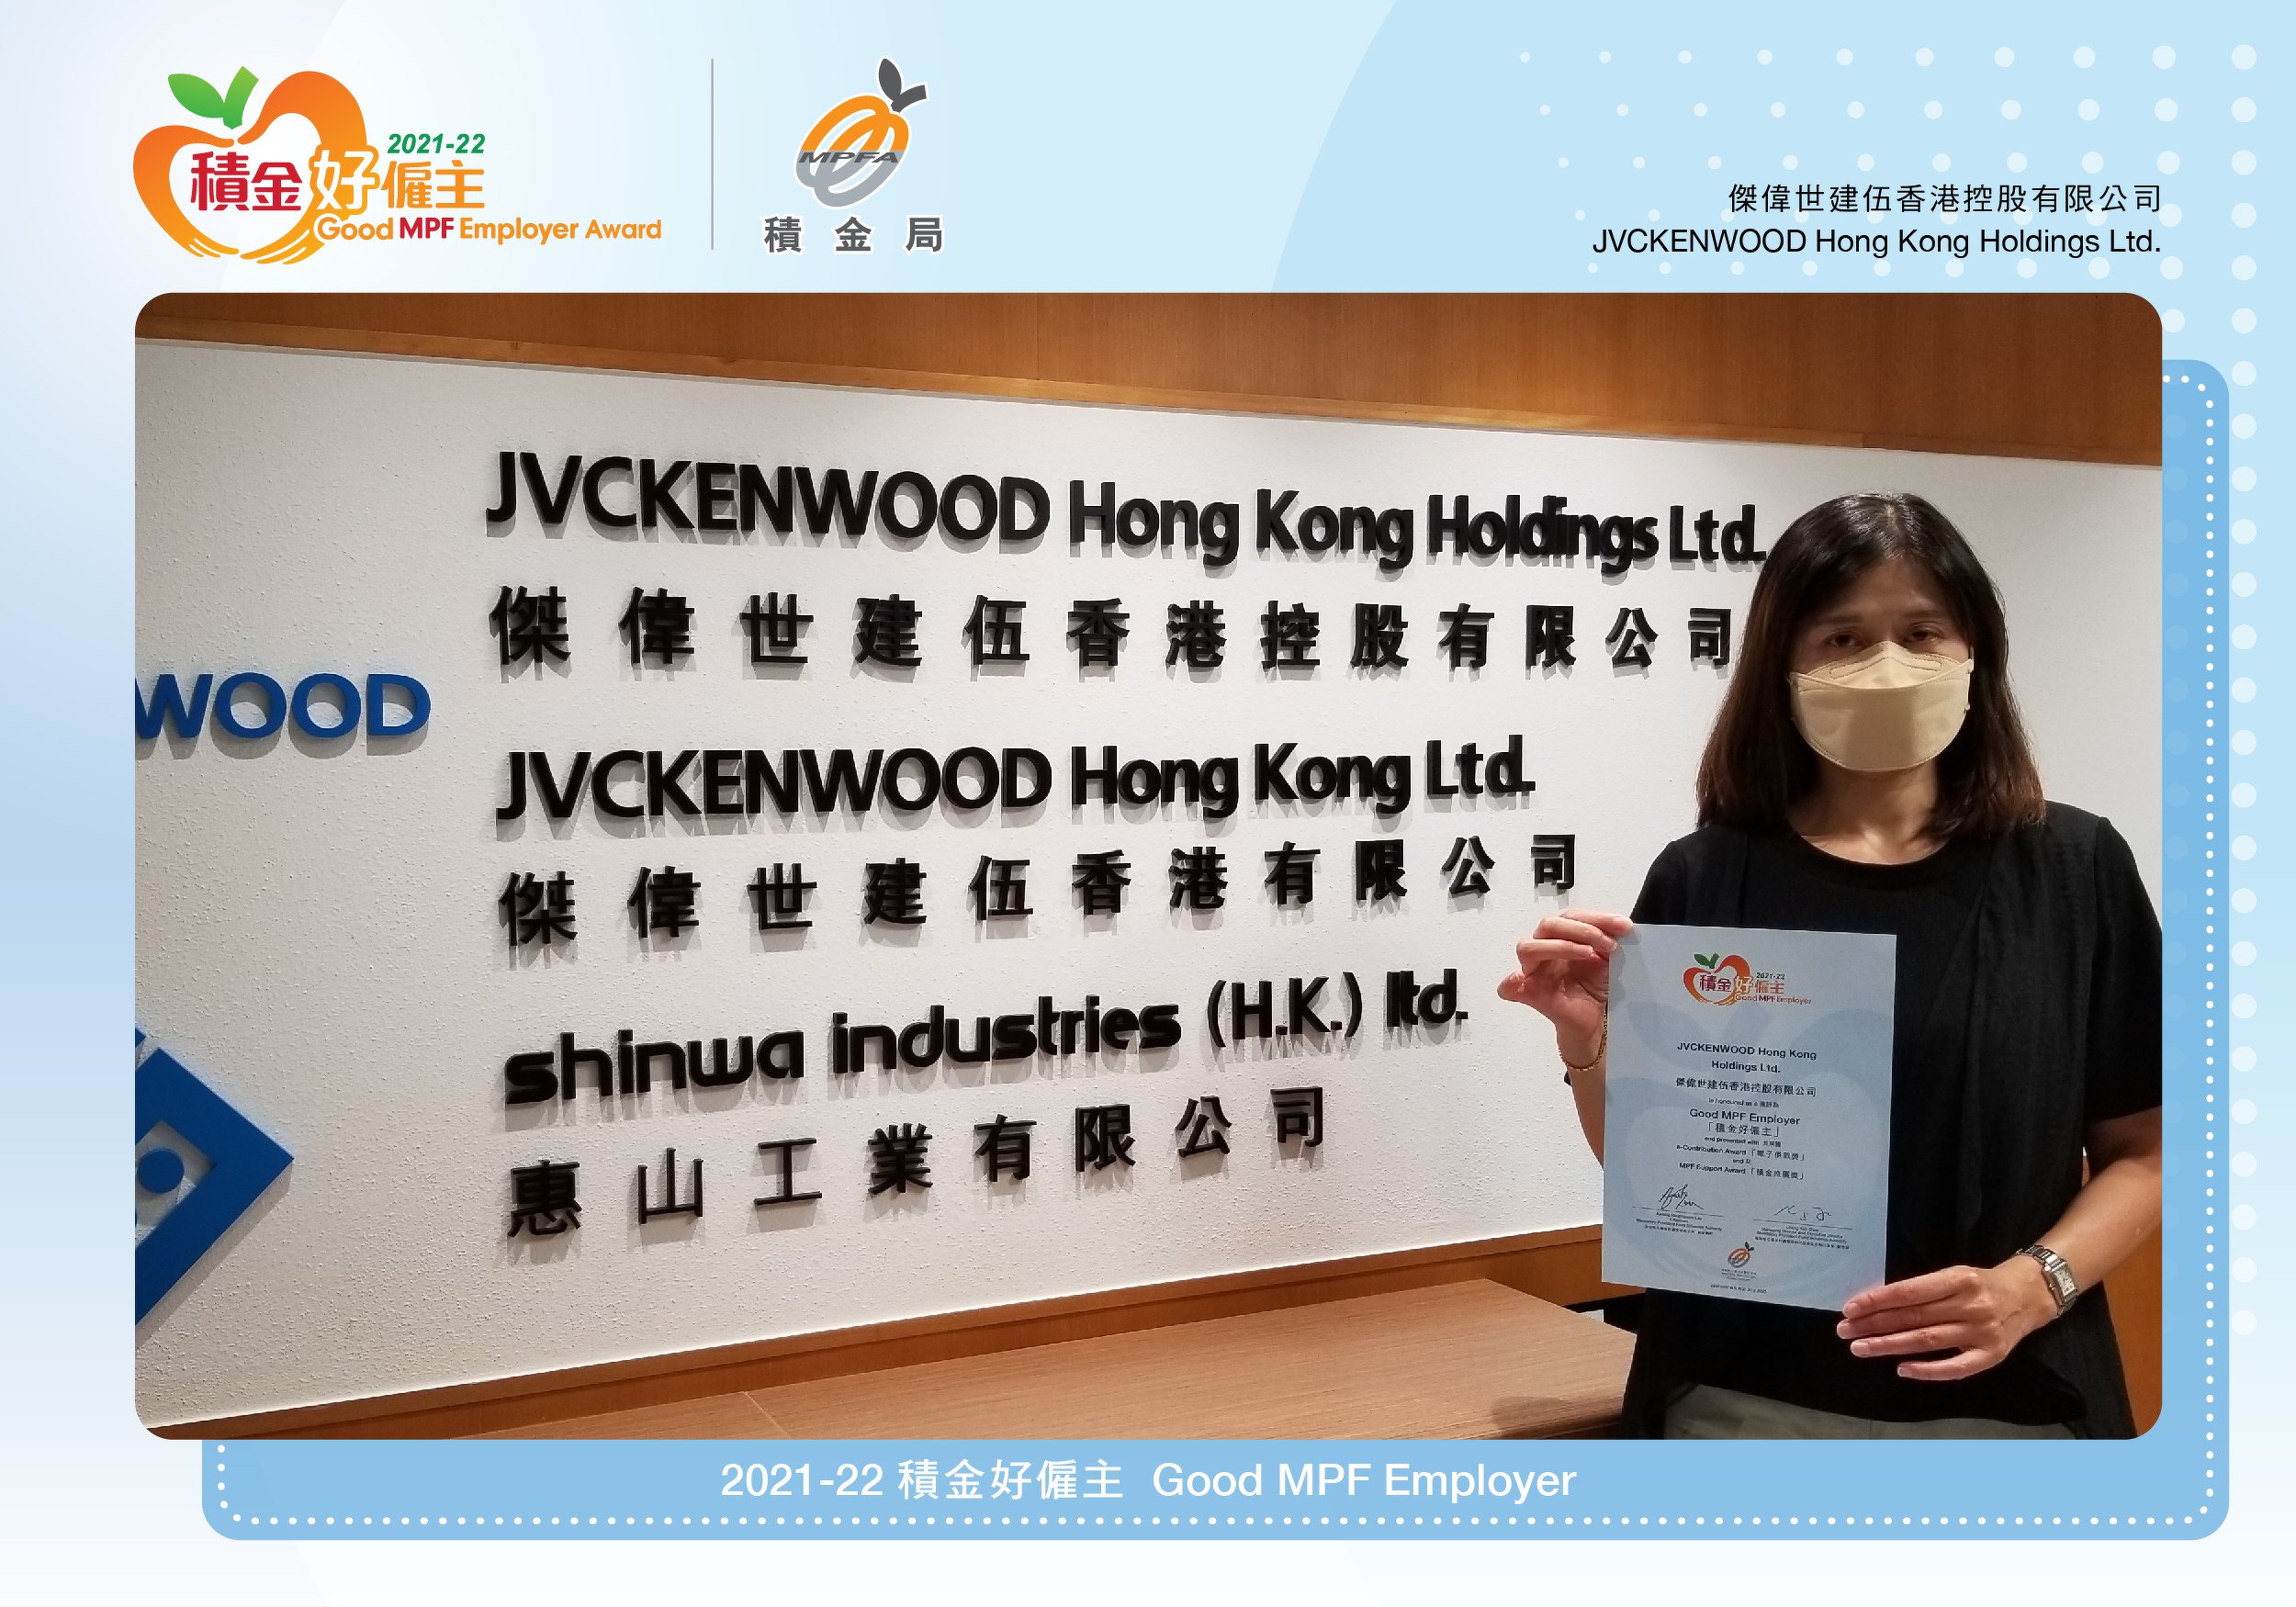 JVCKENWOOD Hong Kong Holdings Ltd. 傑偉世建伍香港控股有限公司